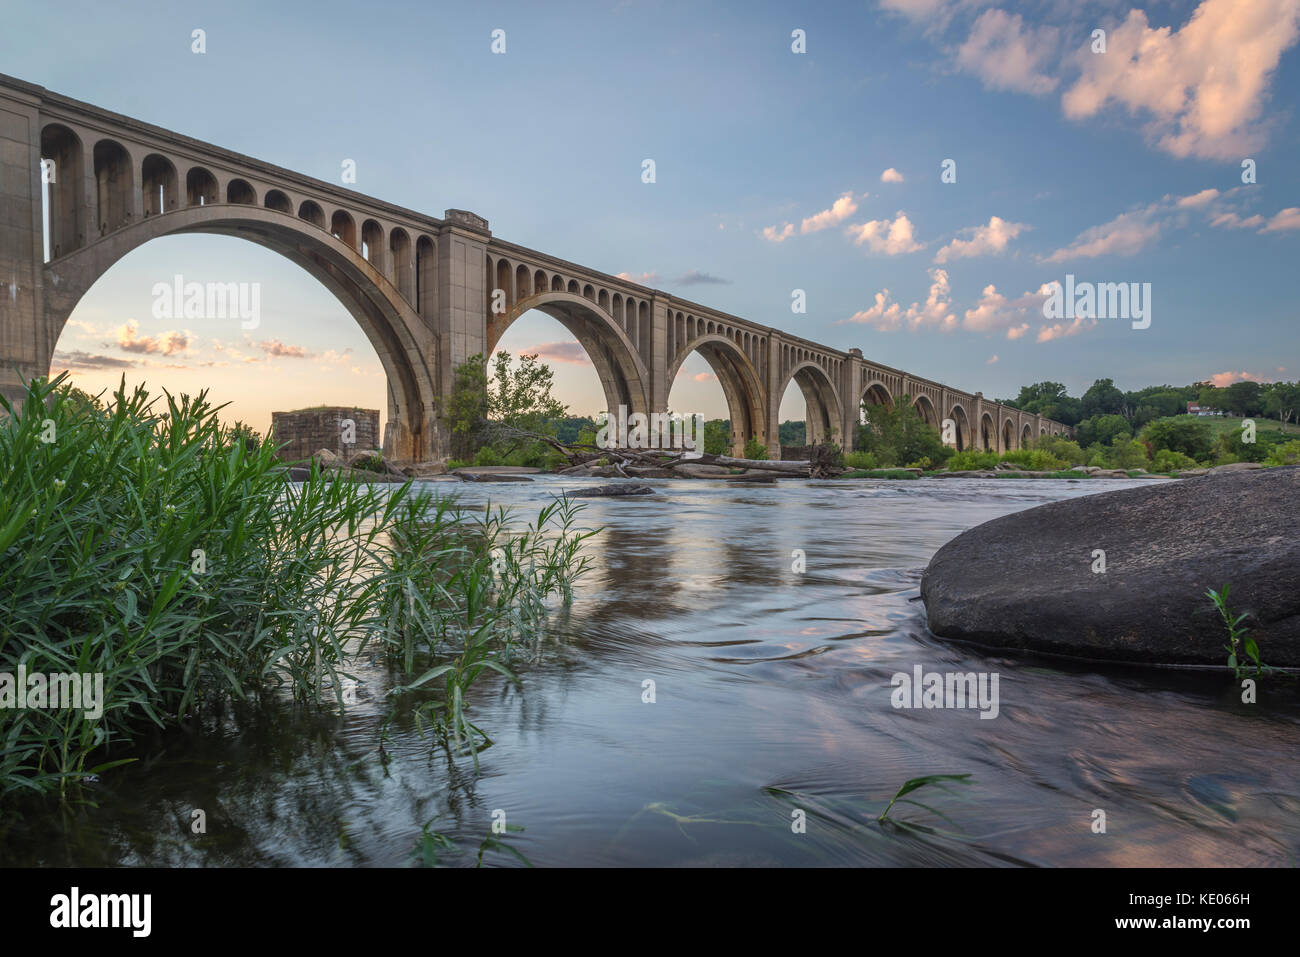 A graceful, arched railroad bridge spans the James River near Richmond, Virginia, USA. Stock Photo